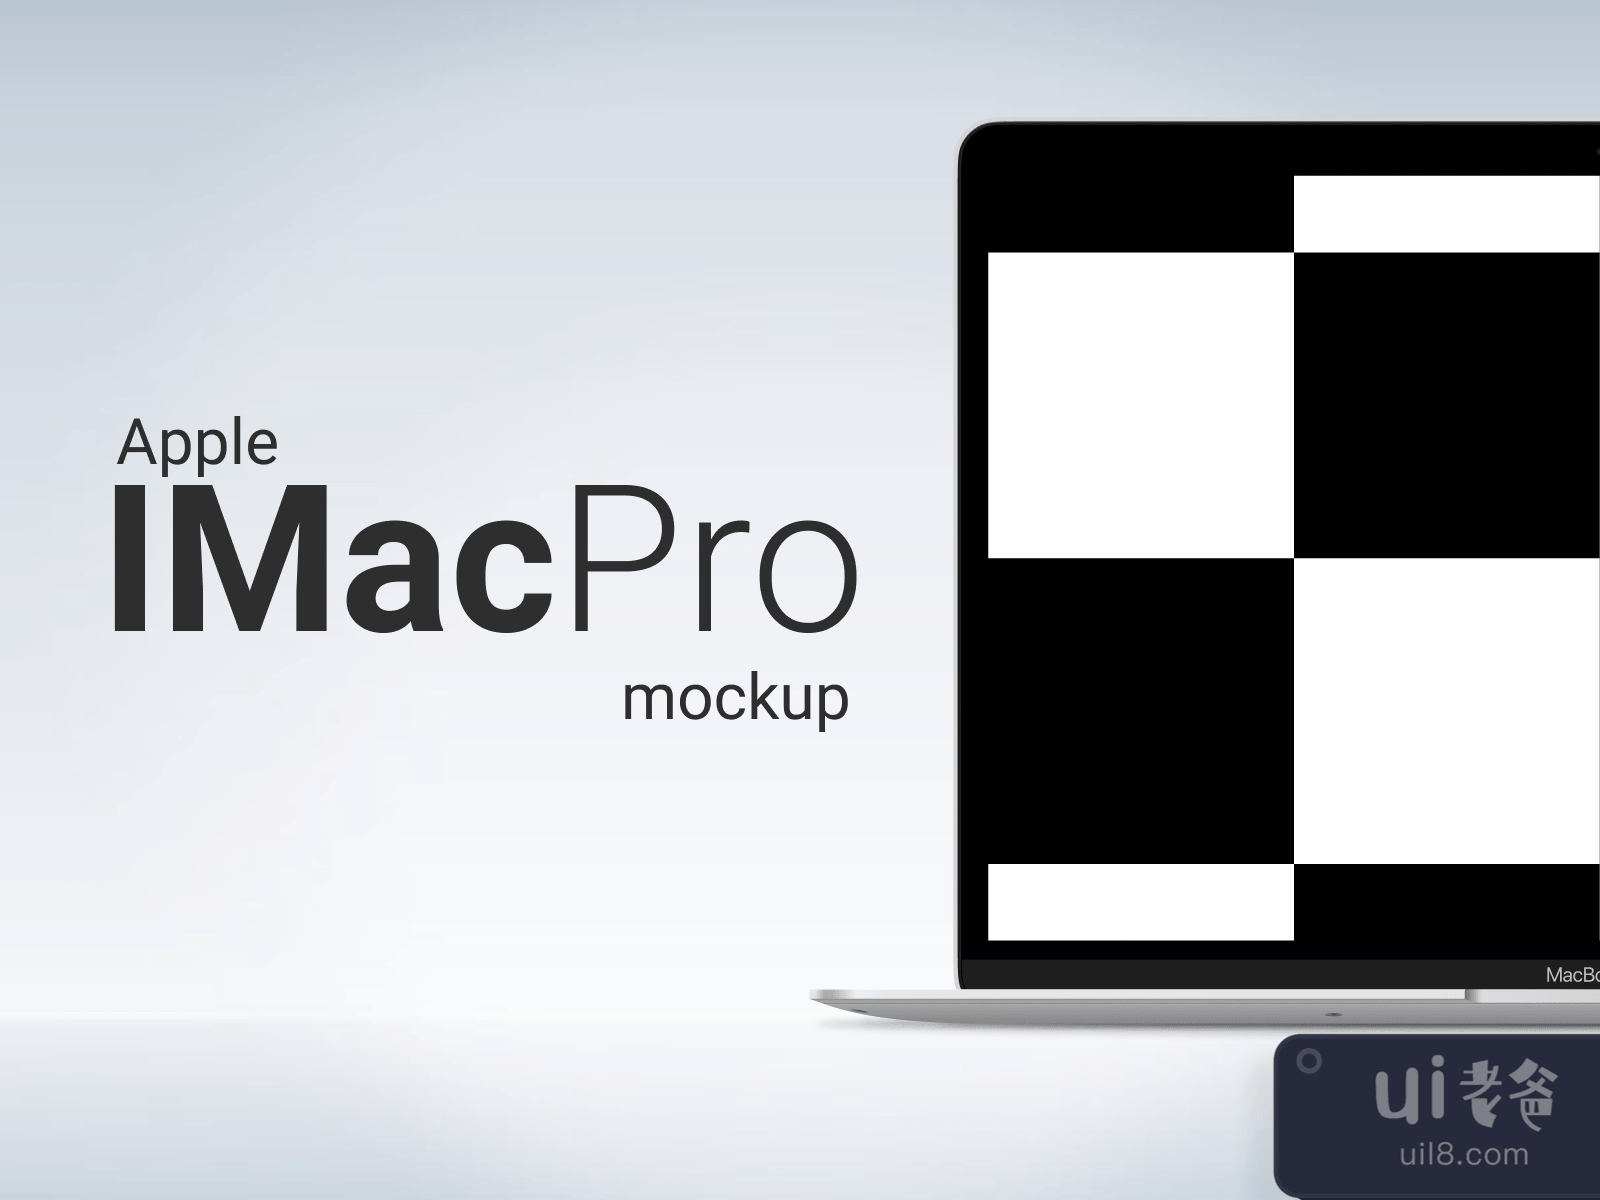 iMac Pro 27 Mockup for Figma and Adobe XD No 3